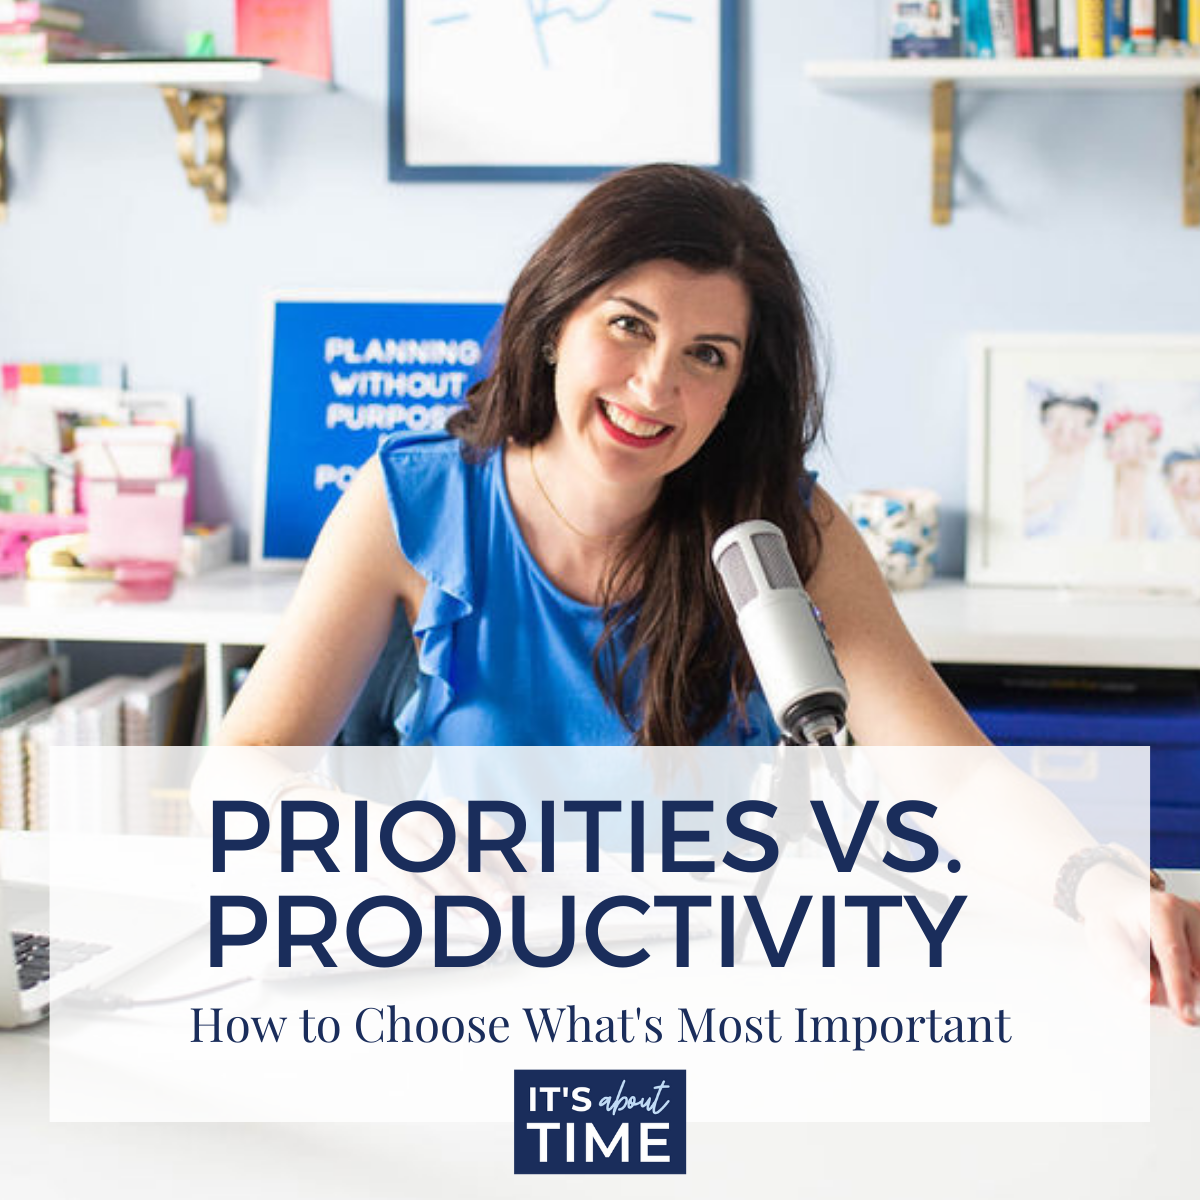 Priorities vs. Productivity